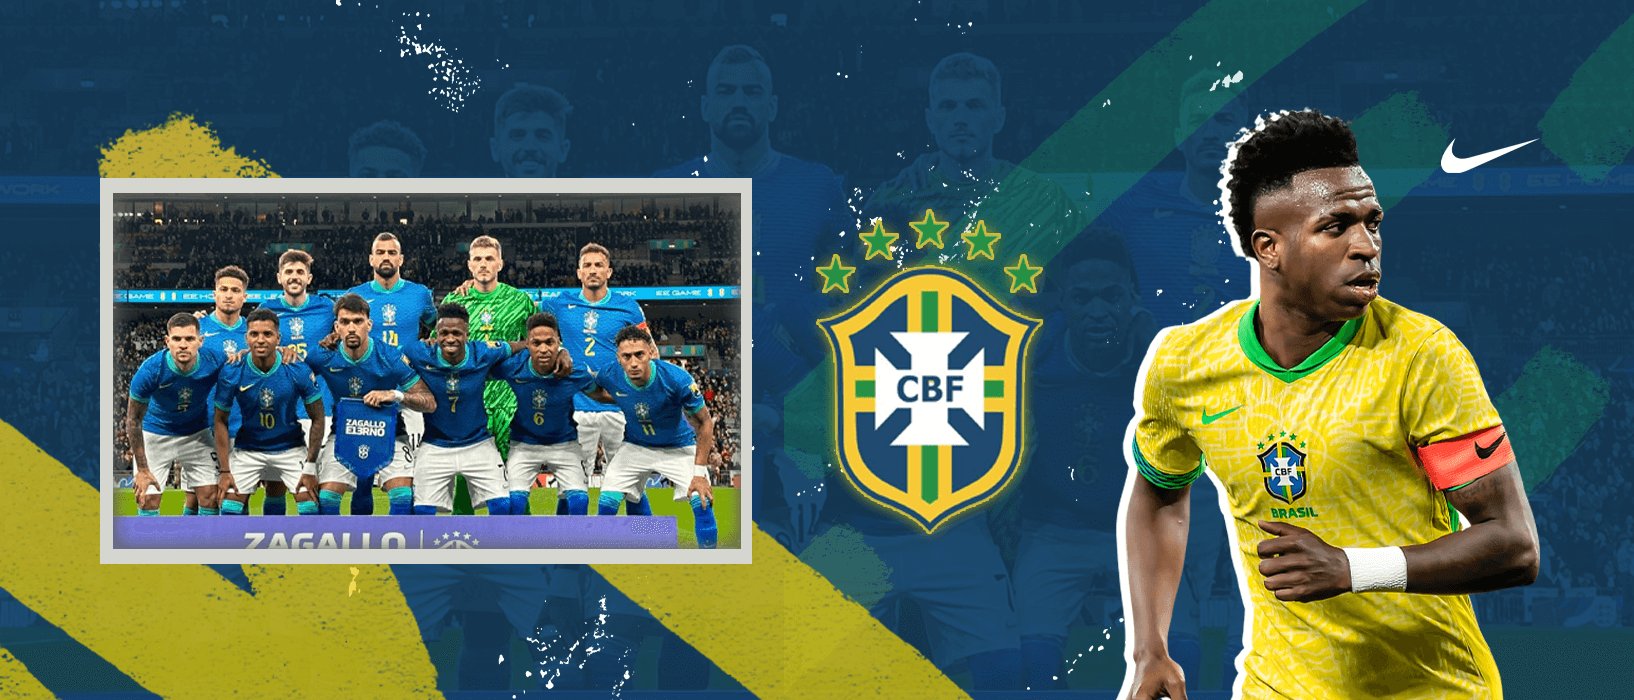 Brazil Soccer Jerseys, Shits & Gear - Free Shipping